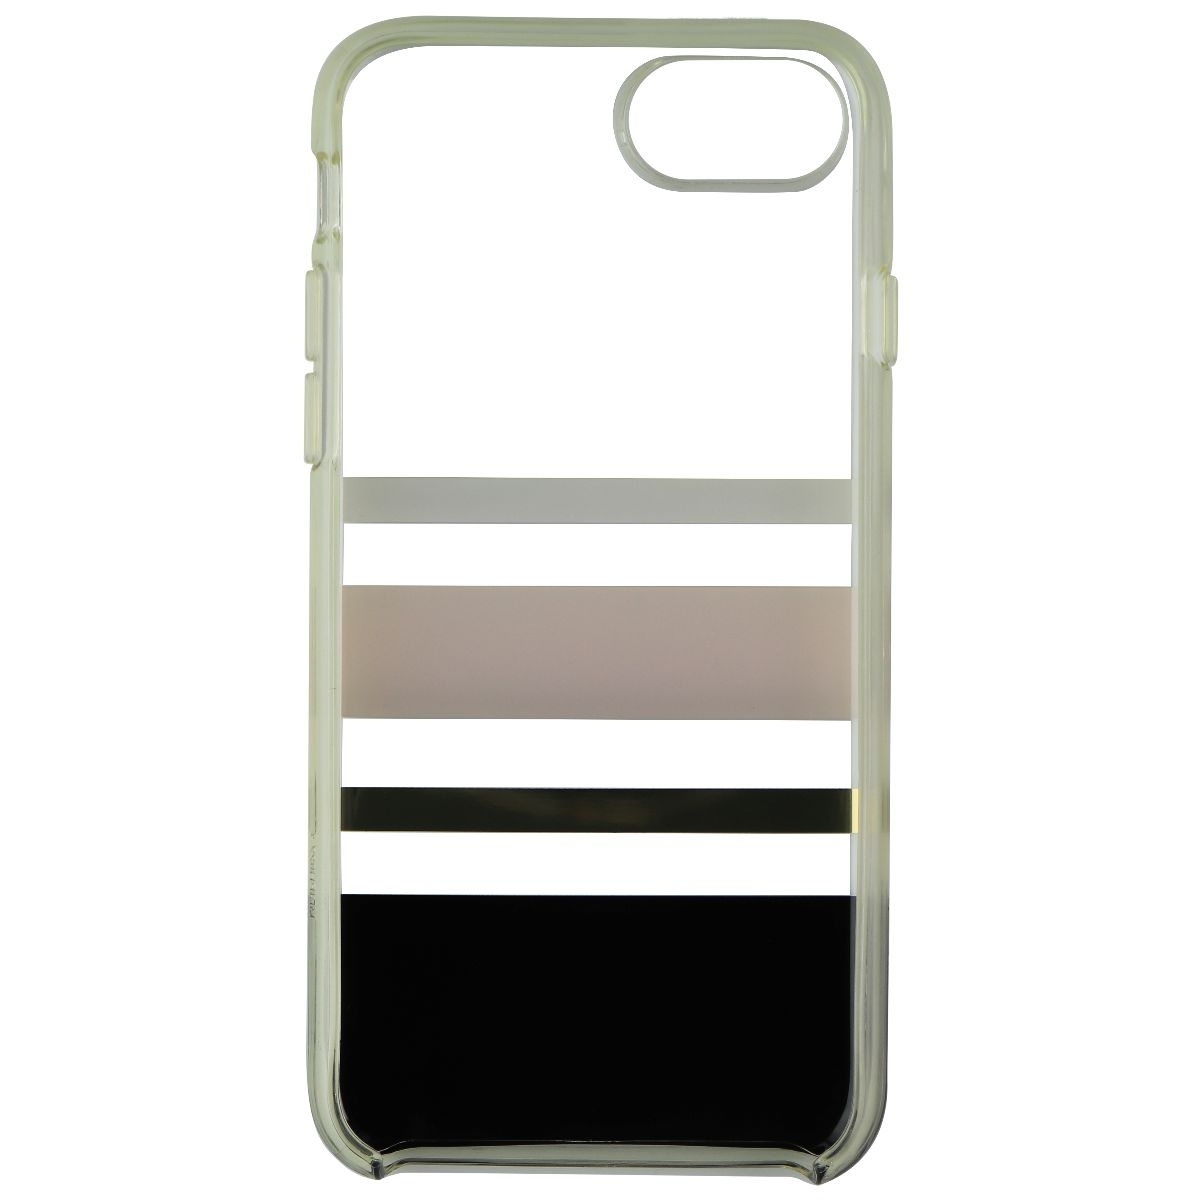 Kate Spade Protective Hardshell Case For IPhone 8/7 - Cream/Blush/Gold (Refurbished)